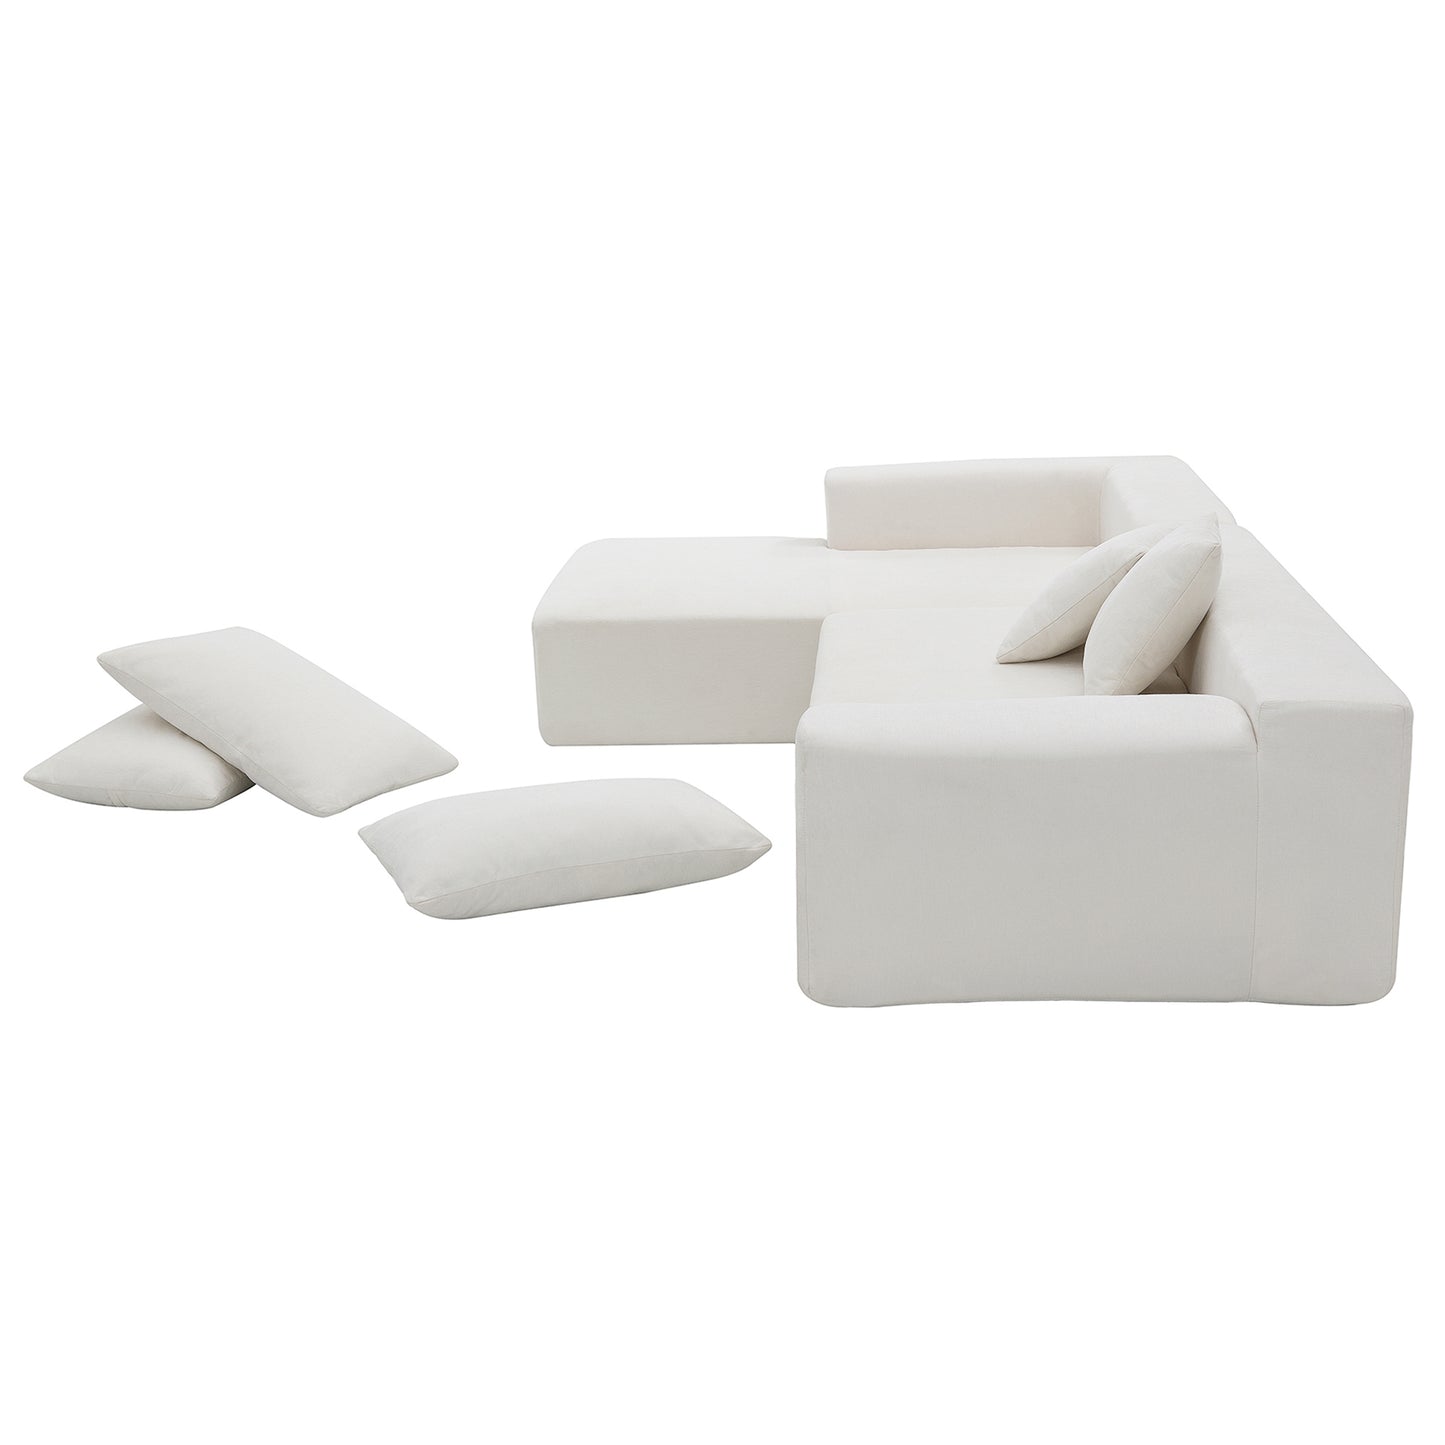 Sleek Sleeper Sofa: Ideal for Living, Bedrooms, Salons